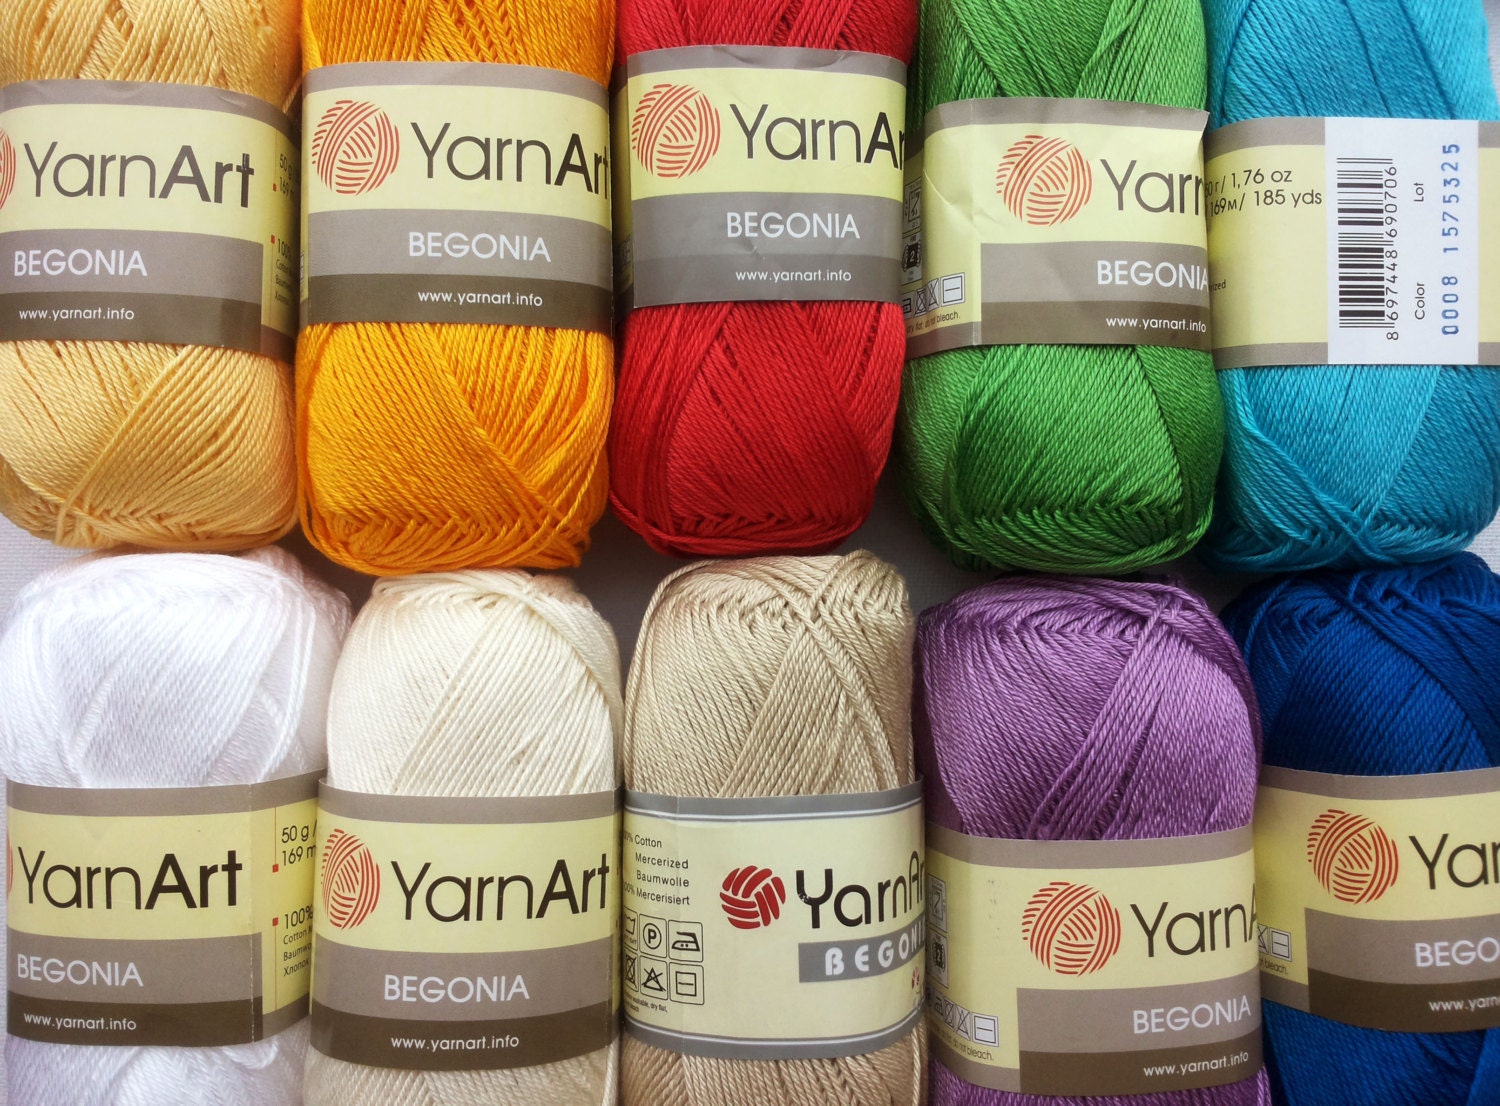 100% Mercerized Cotton Yarn Knitting Crochet by Yarnart Begonia 50g 169m 